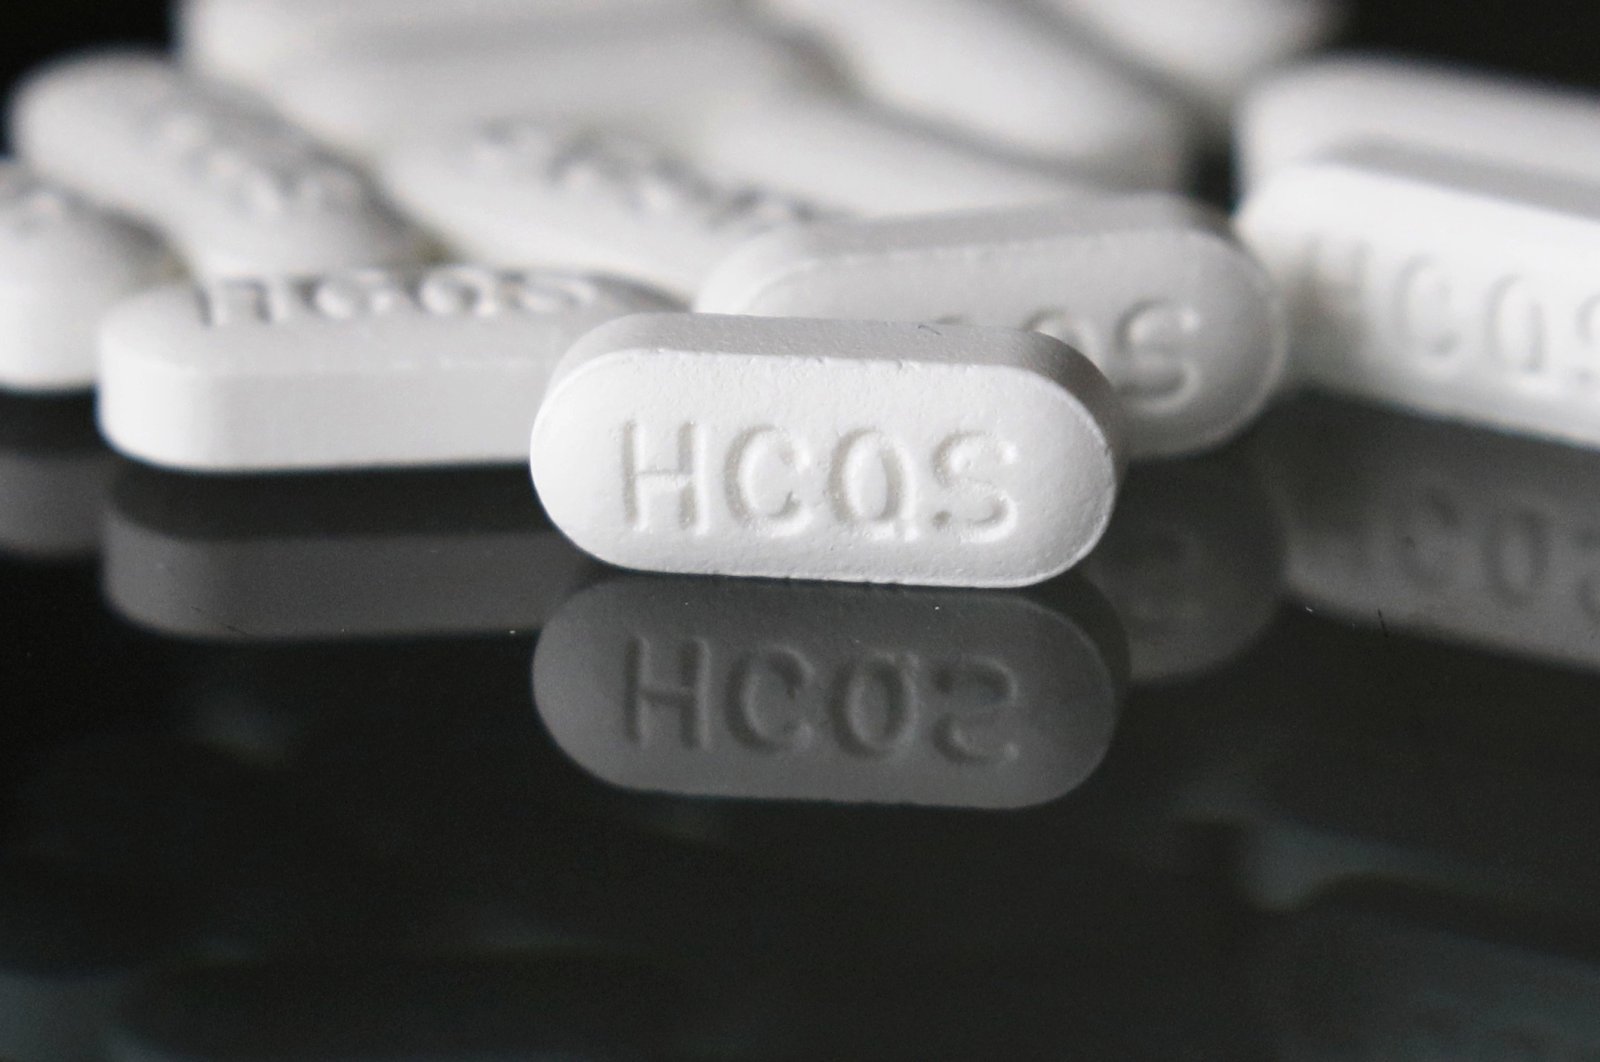 File photo shows an arrangement of hydroxychloroquine pills in Las Vegas, April 6, 2020. (AP Photo)